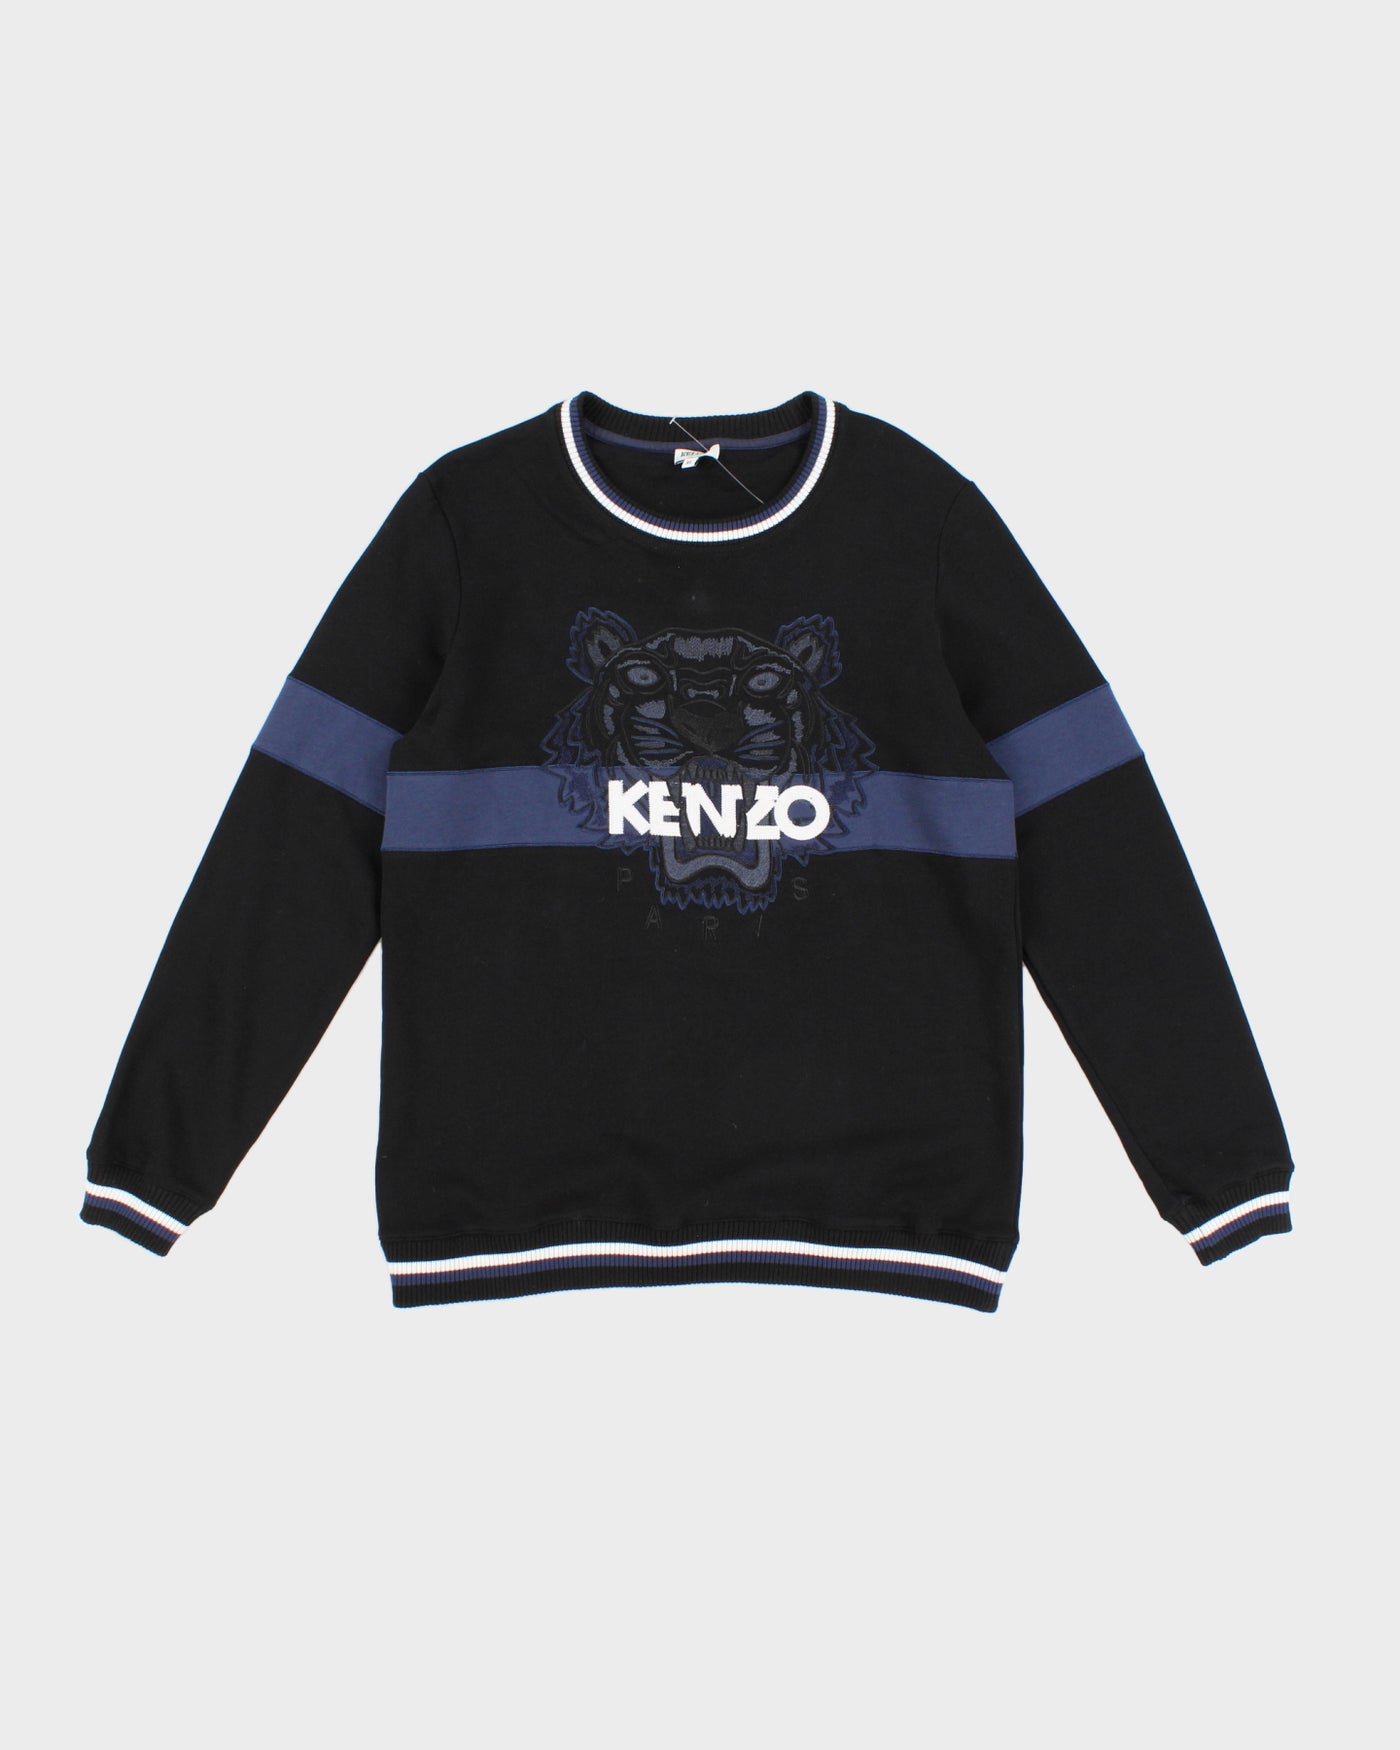 Kenzo Men's Black Tiger Embroidery Sweatshirt - M